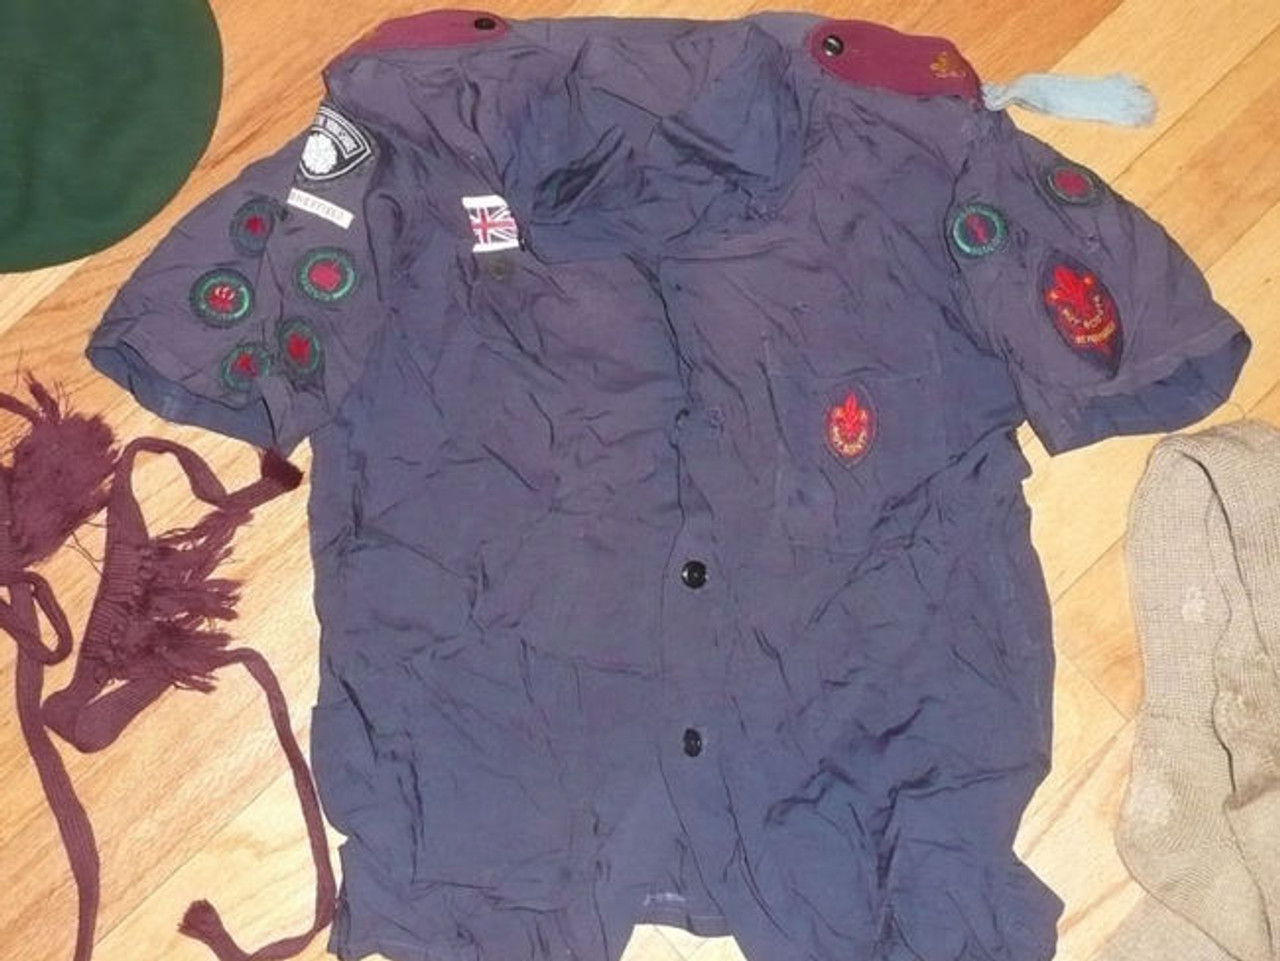 1950's British Senior Boy Scout Uniform traded for at the 1957 World Jamboree